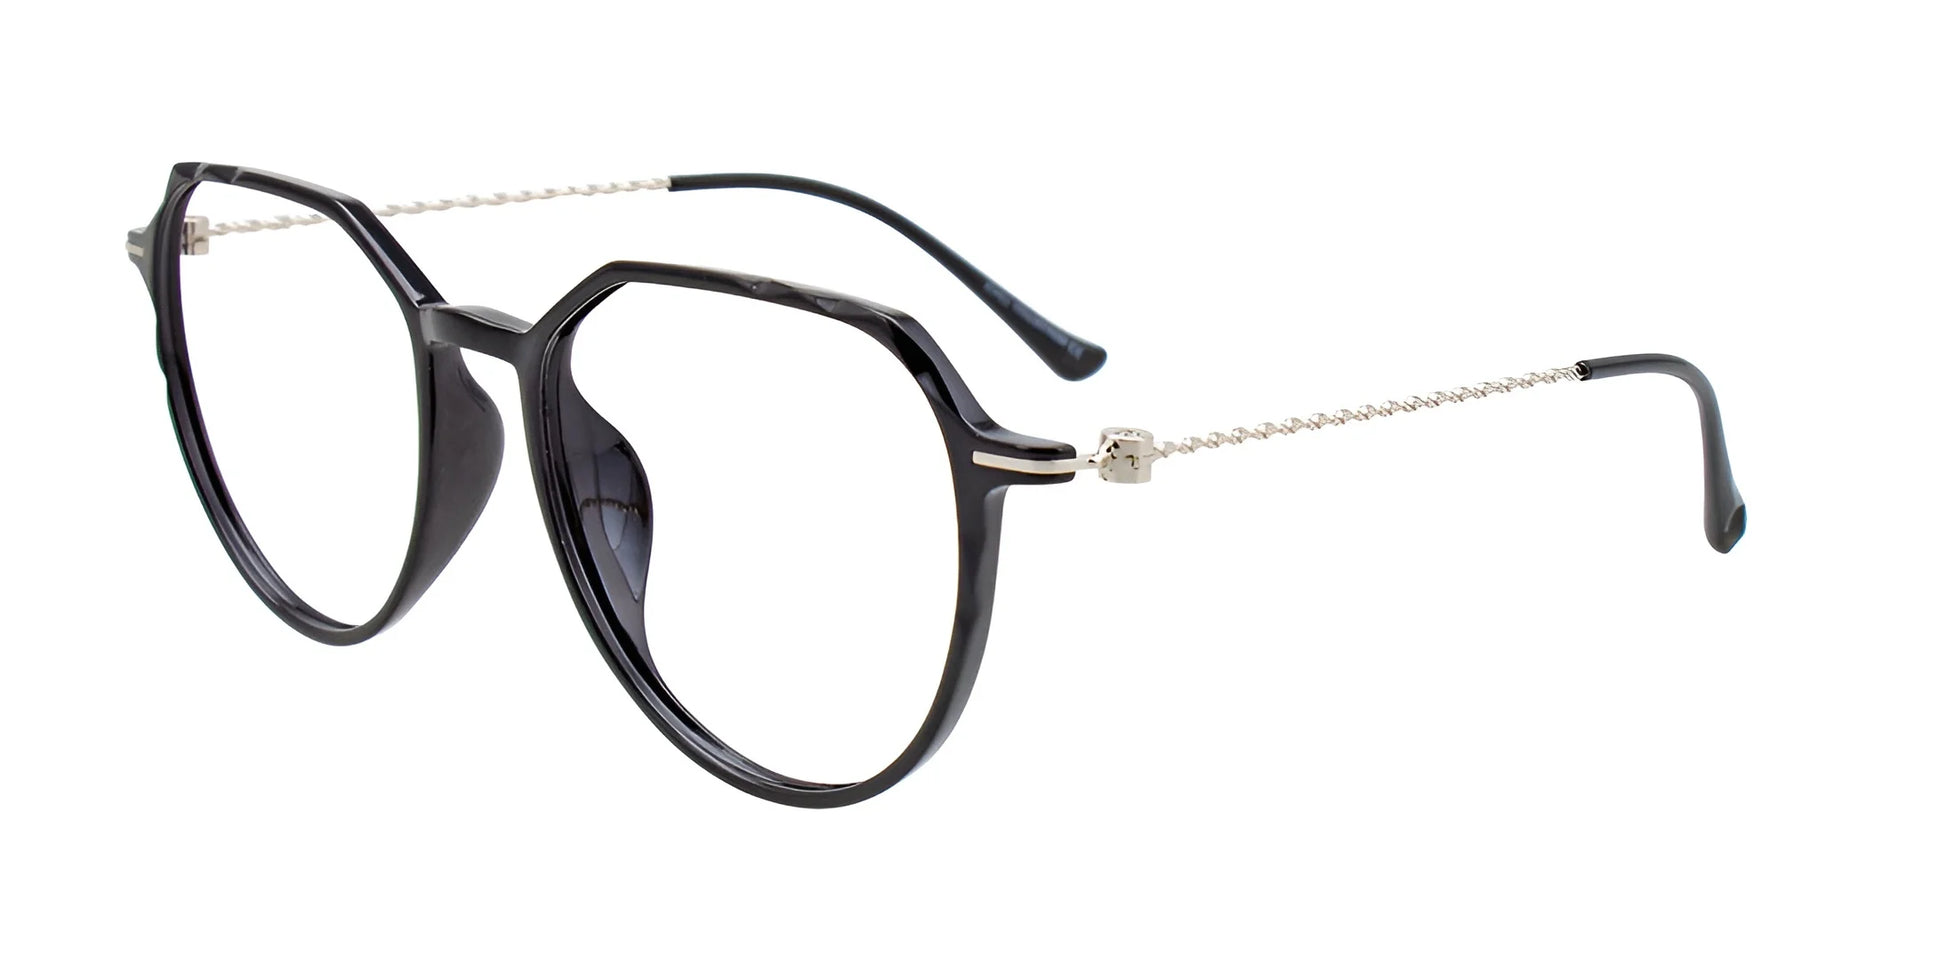 iCHILL C7016 Eyeglasses Black & Silver